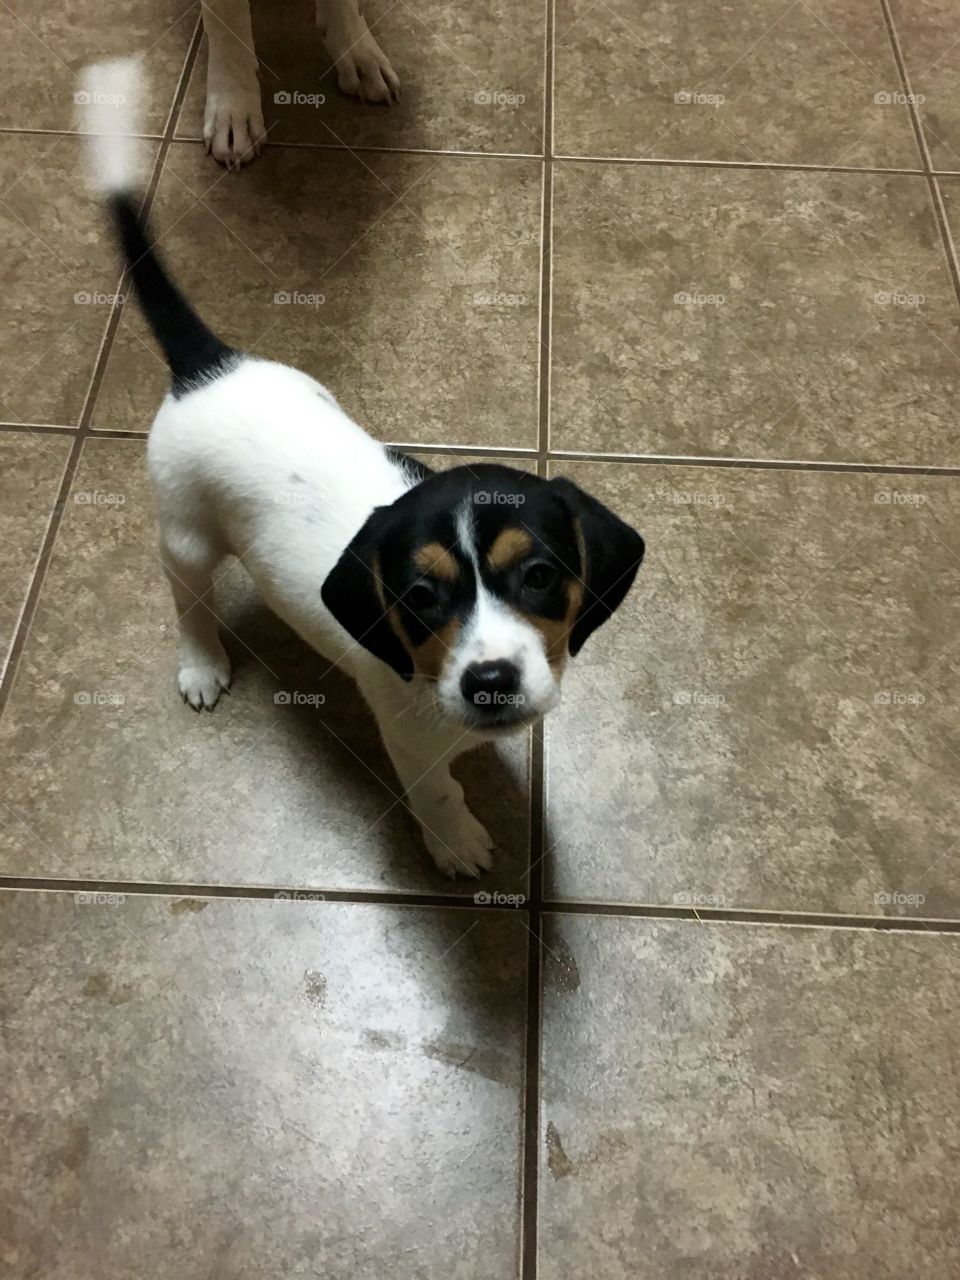 Sweet baby Beagle